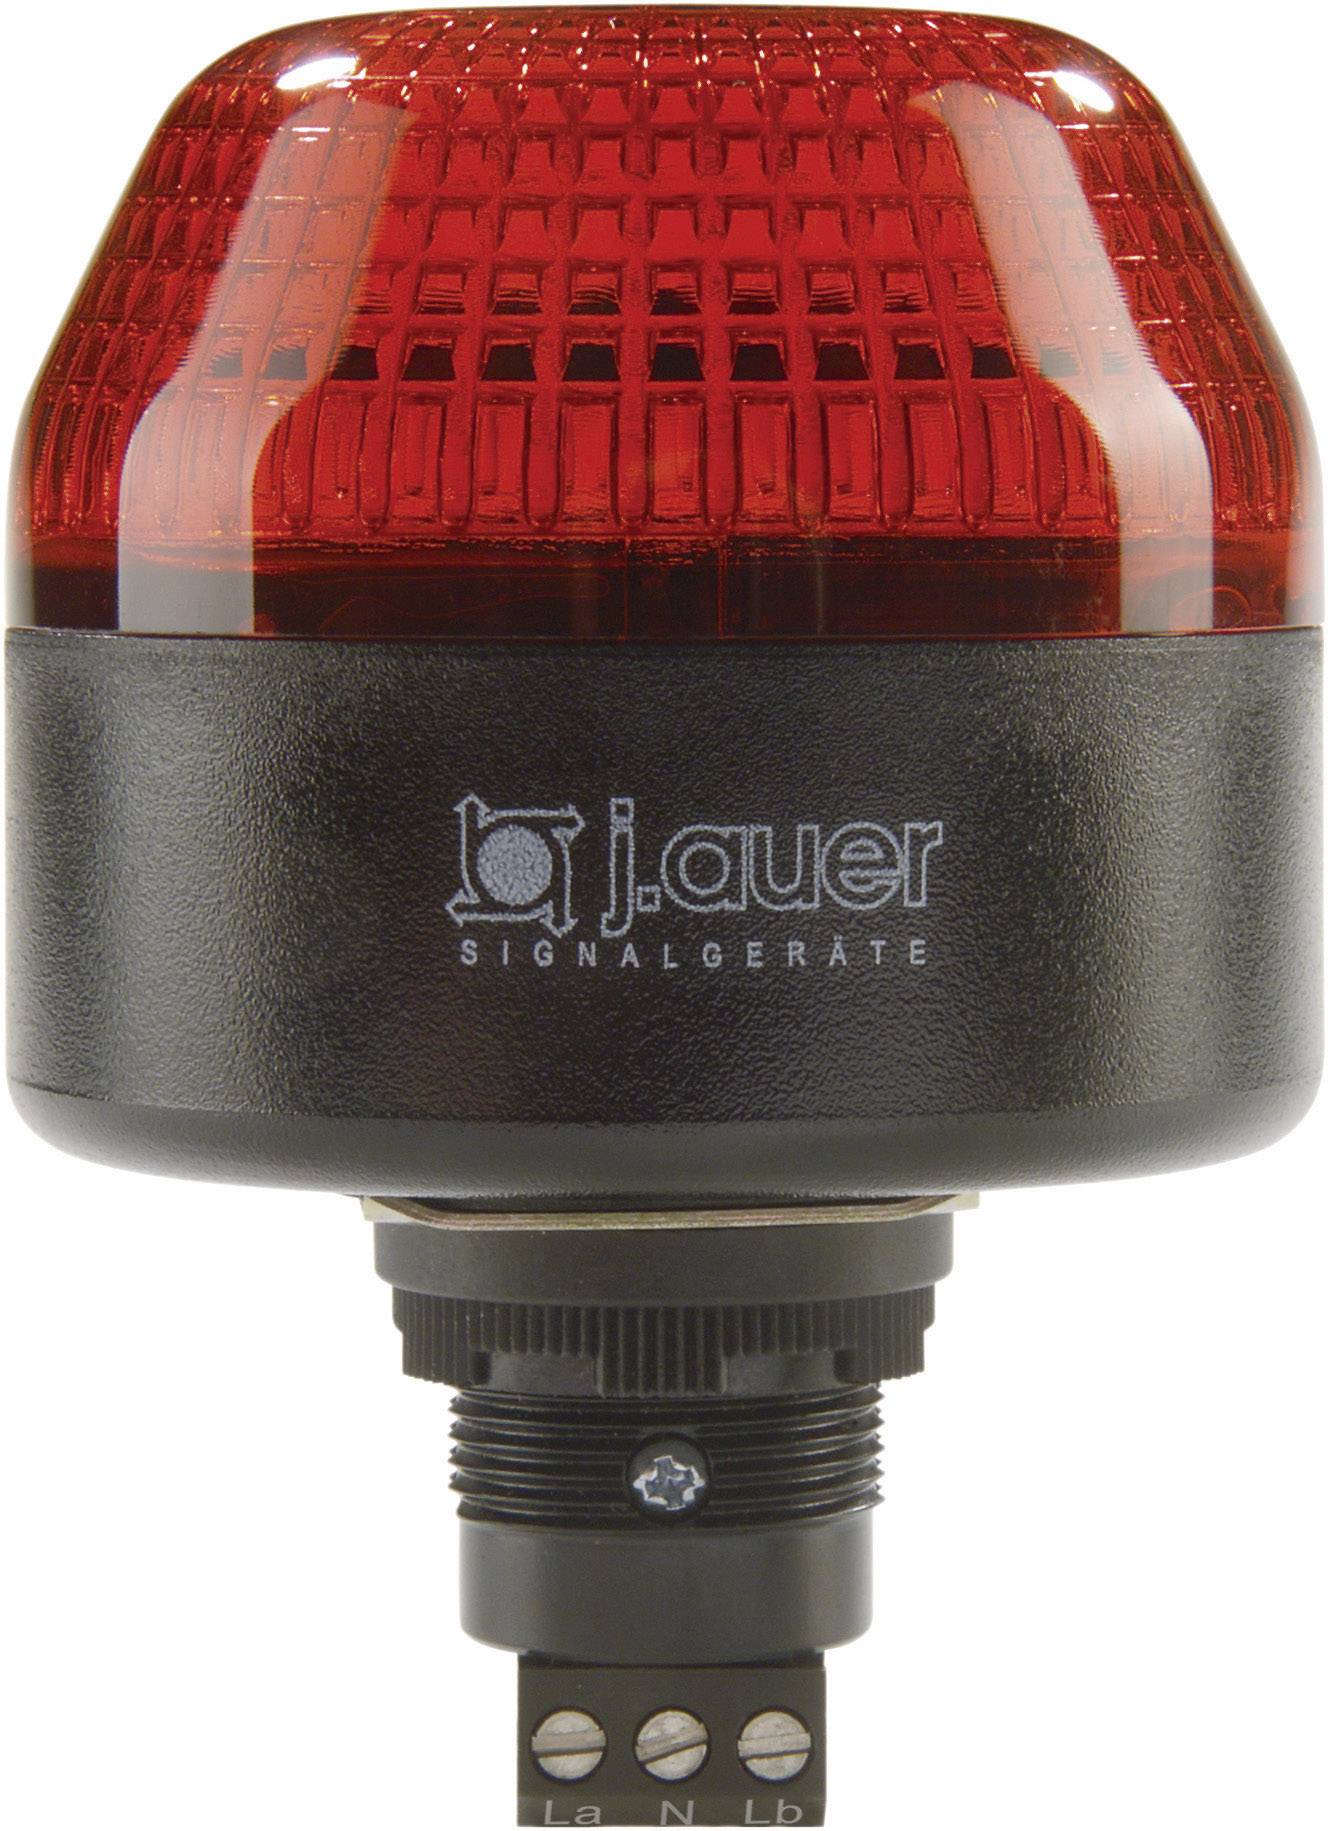 AUER SIGNAL Signalleuchte LED Auer Signalgeräte ICL Rot Rot Blitzlicht 230 V/AC